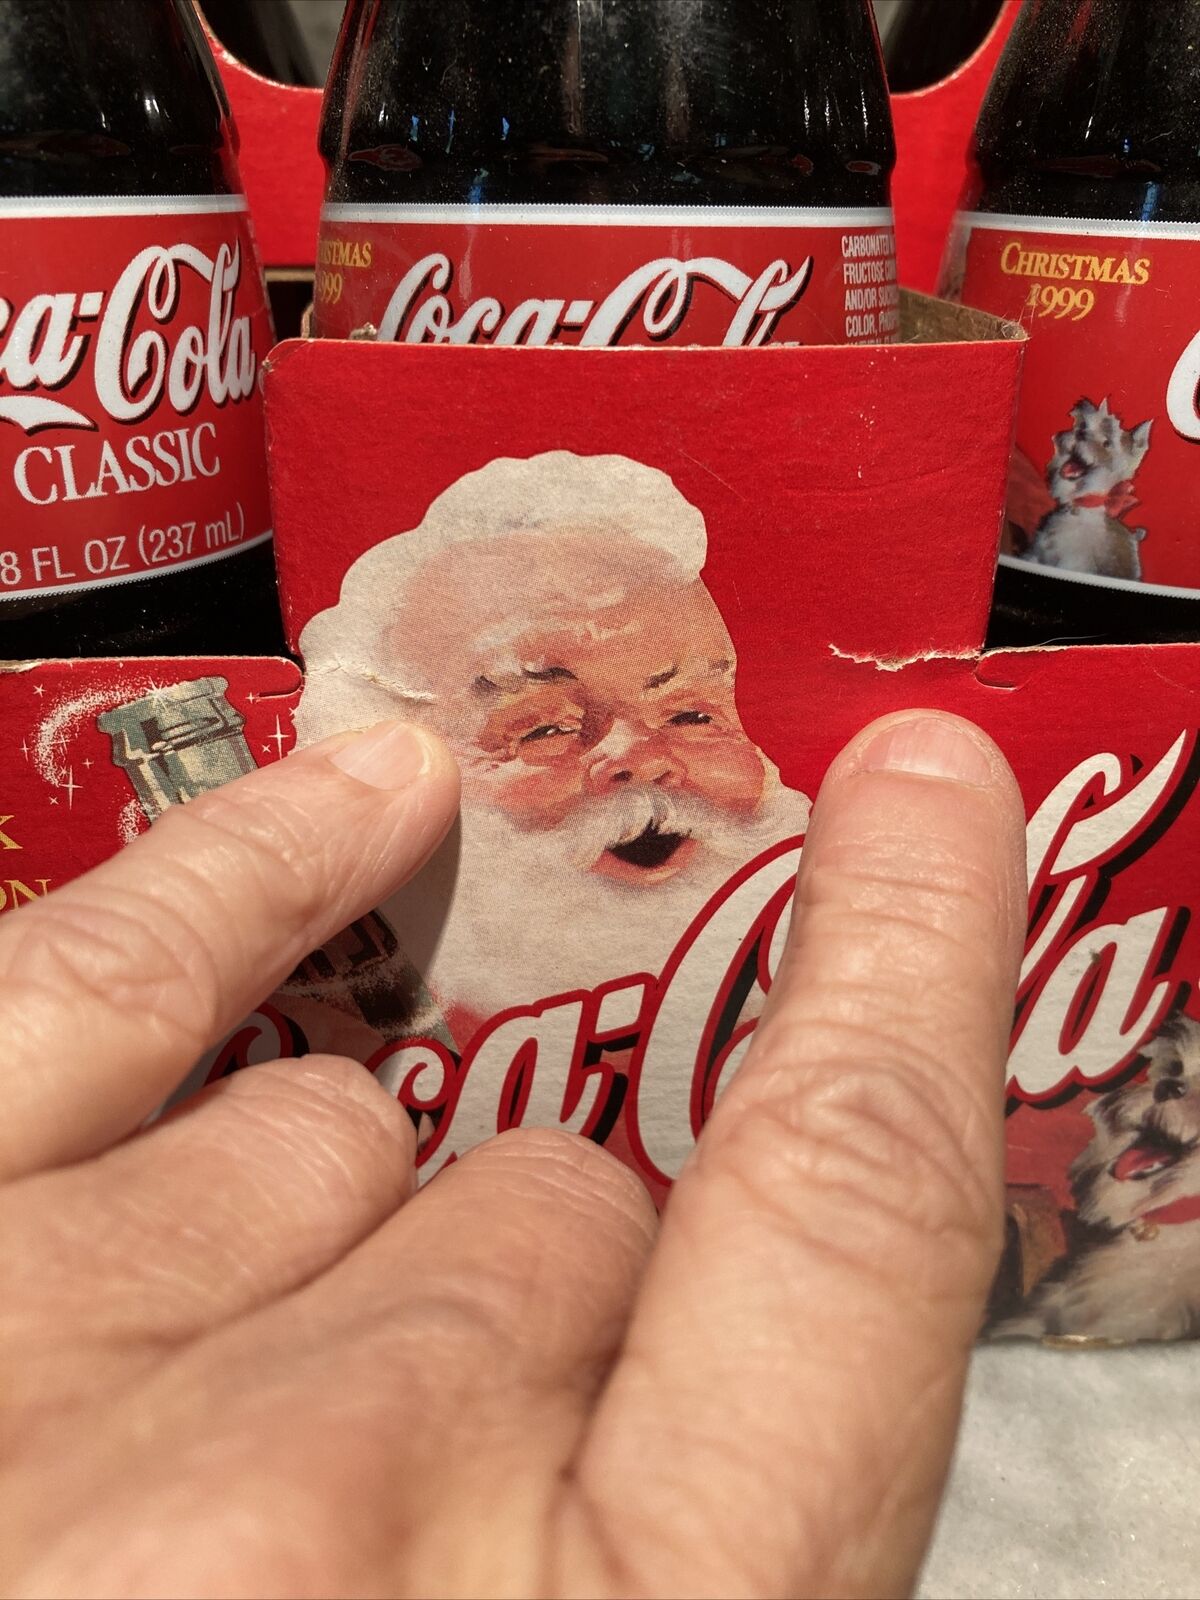 Classic Coca-Cola “Happy Holidays” Sealed Unopened Glass Bottles 6 Pack (1999) Без бренда - фотография #4